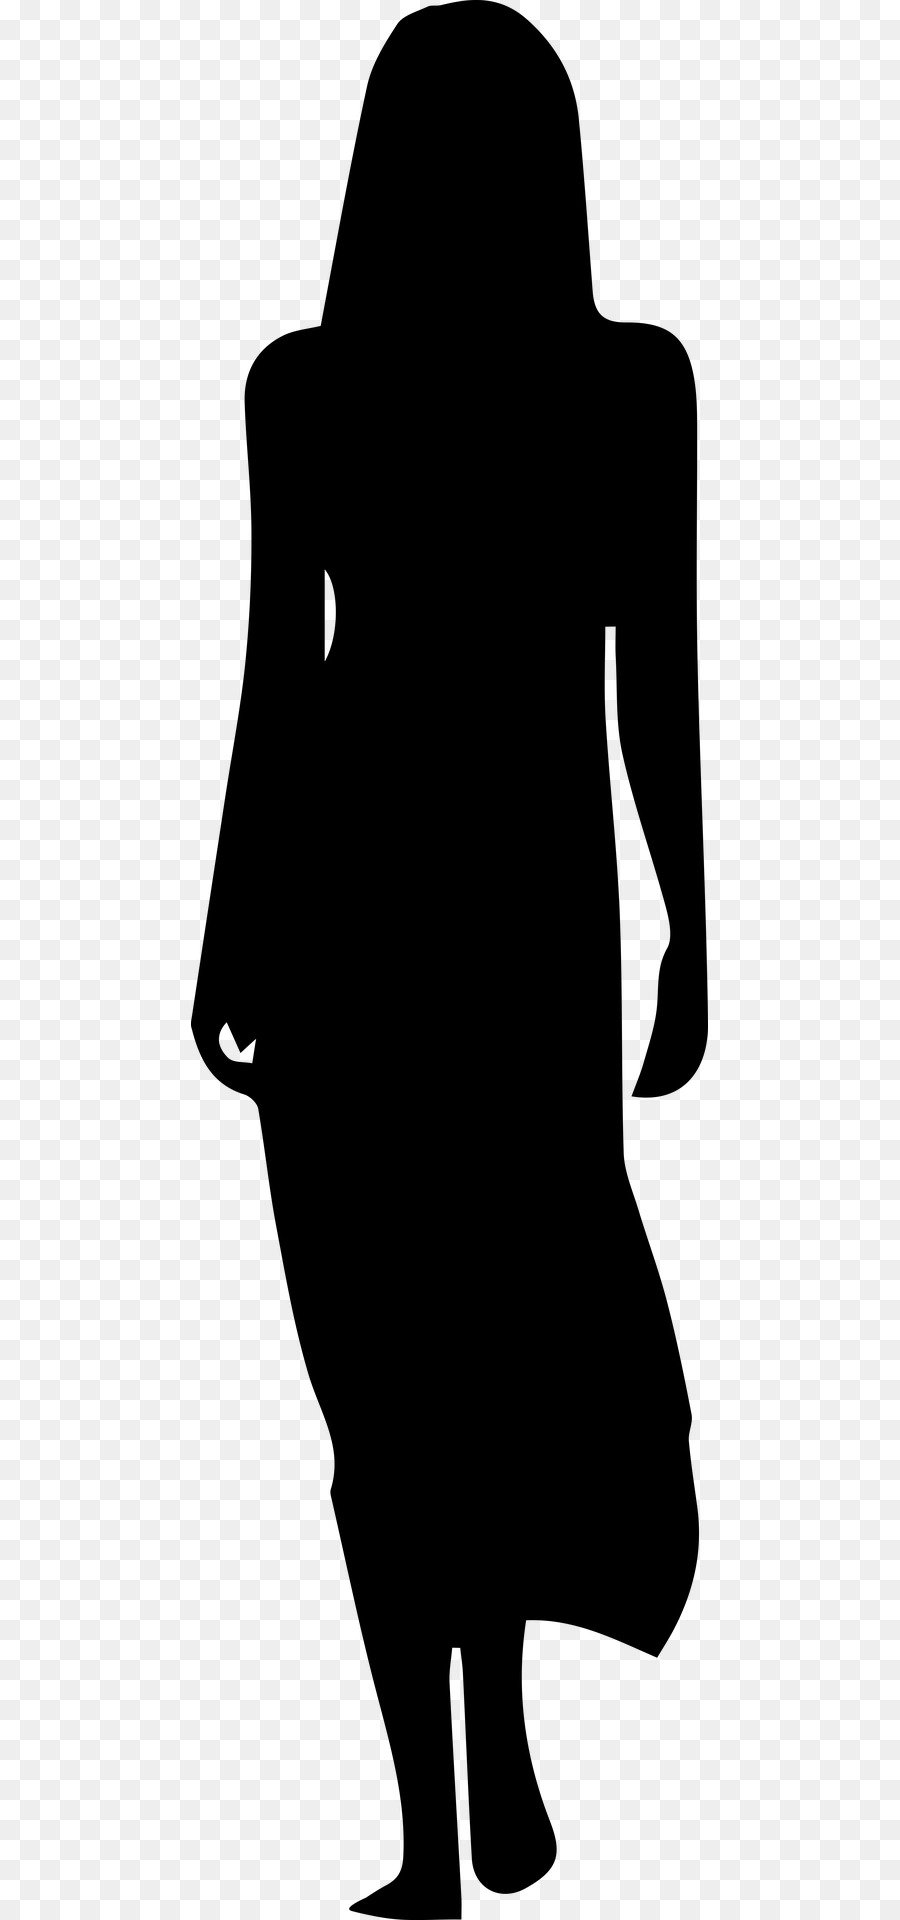 Dress Silhouette Woman Clip art - dress png download - 517*1920 - Free Transparent Dress png Download.